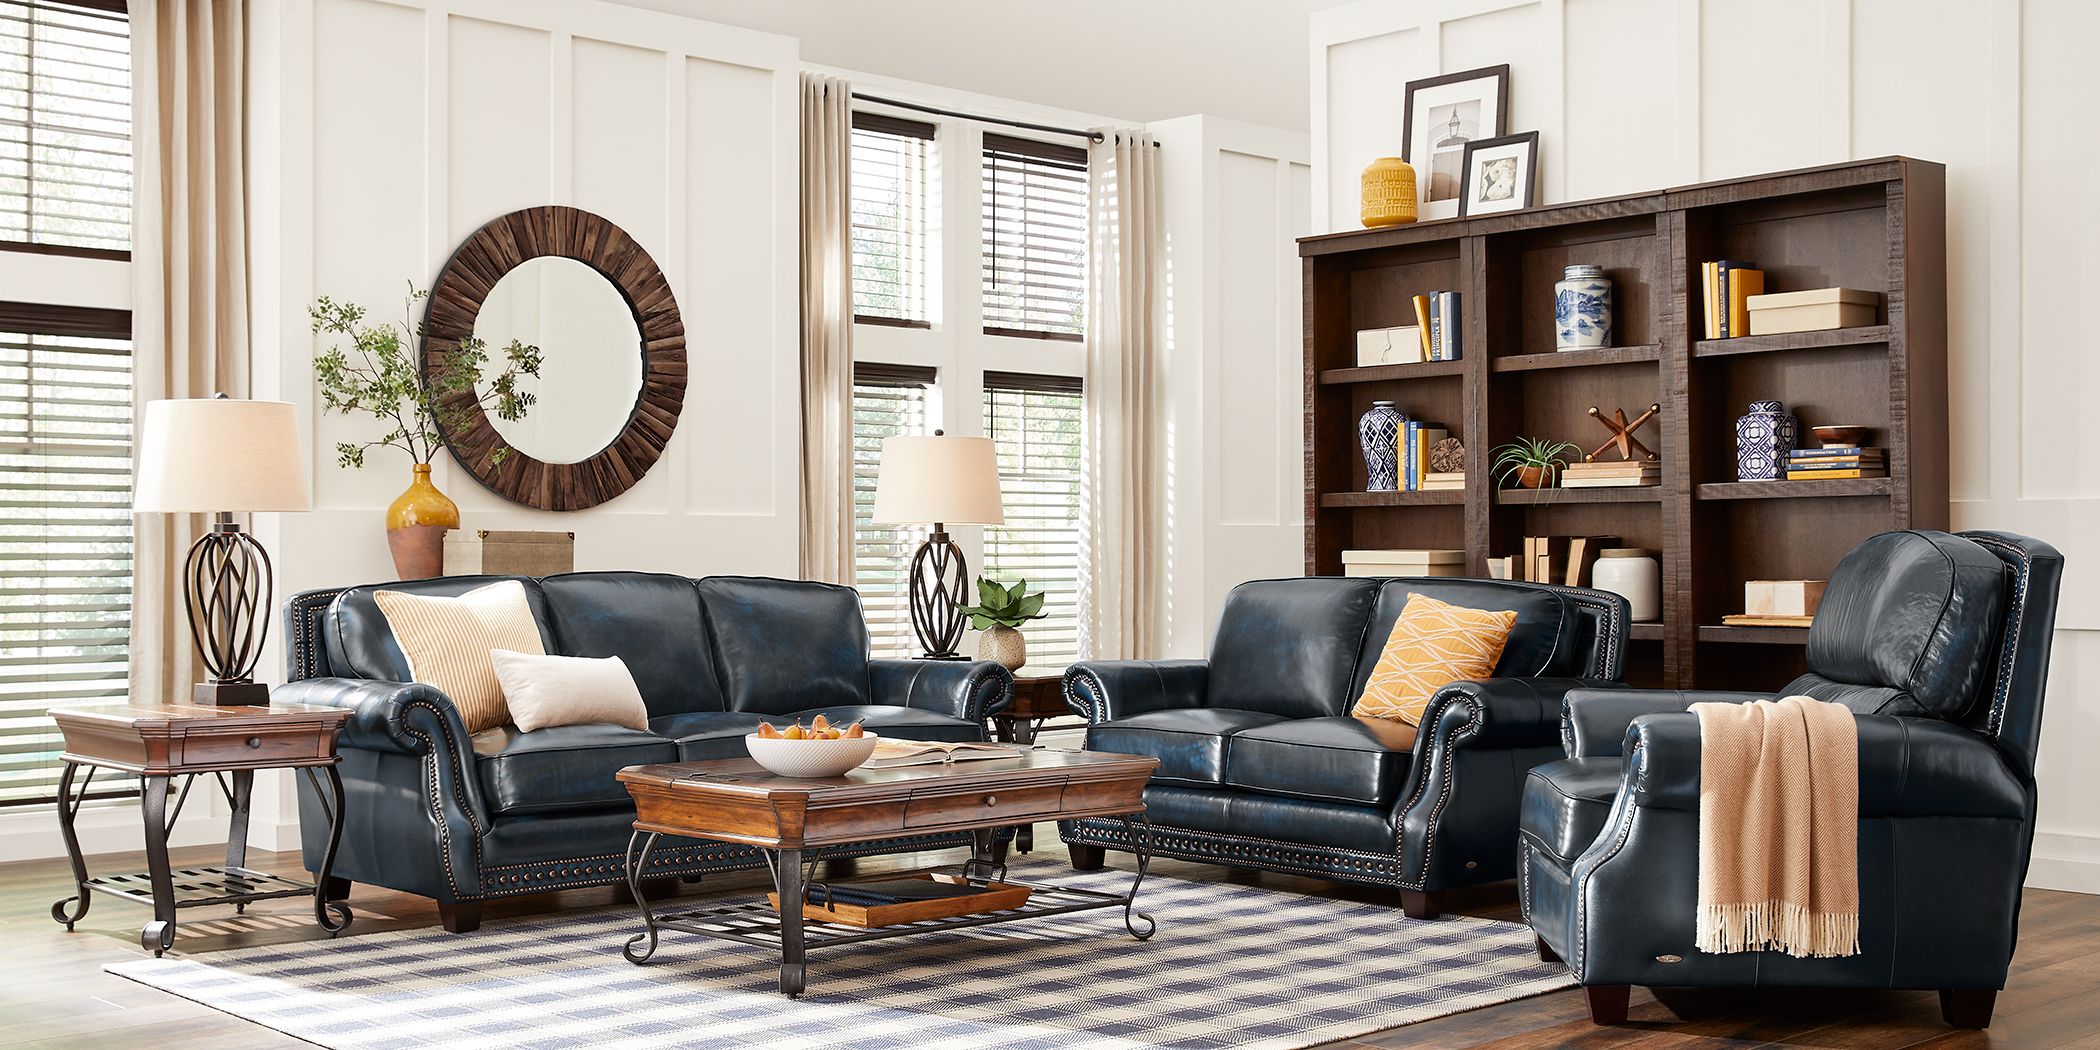 Calvano Blue Leather 3 Pc Living Room, Cindy Crawford Home Calvano Brown Leather 3 Pc Living Room